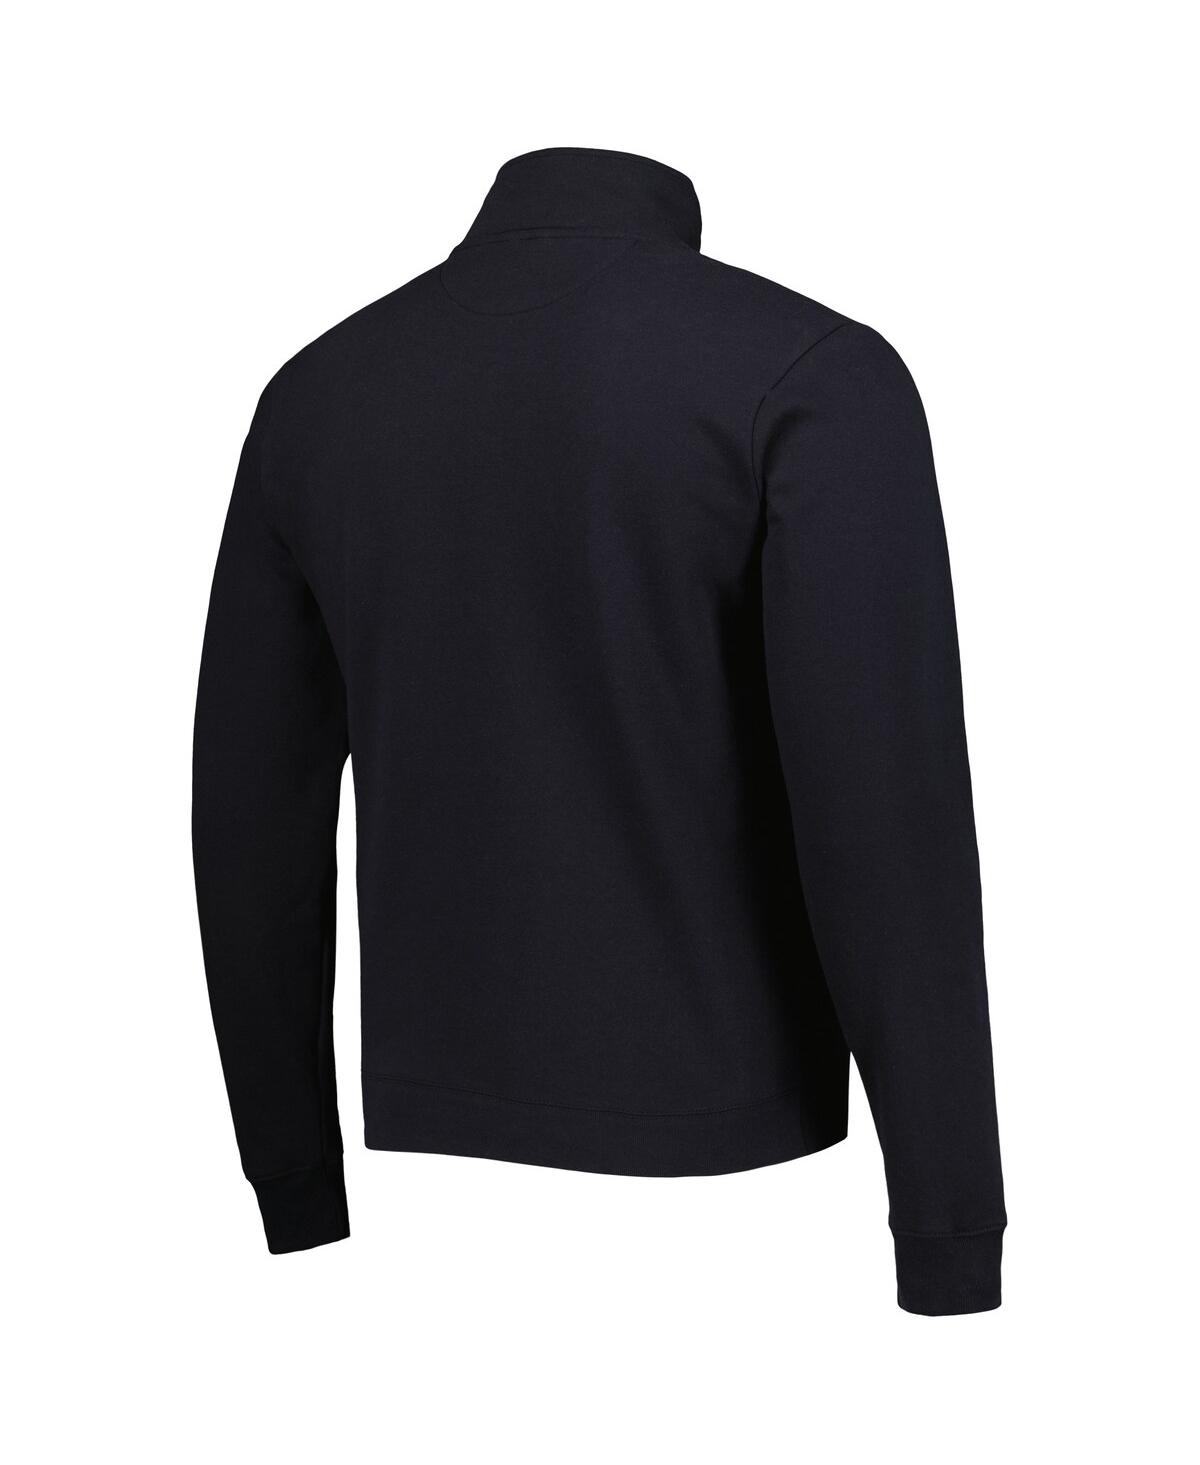 Shop League Collegiate Wear Men's Black Iowa Hawkeyes Stack Essential Fleece Quarter-zip Sweatshirt